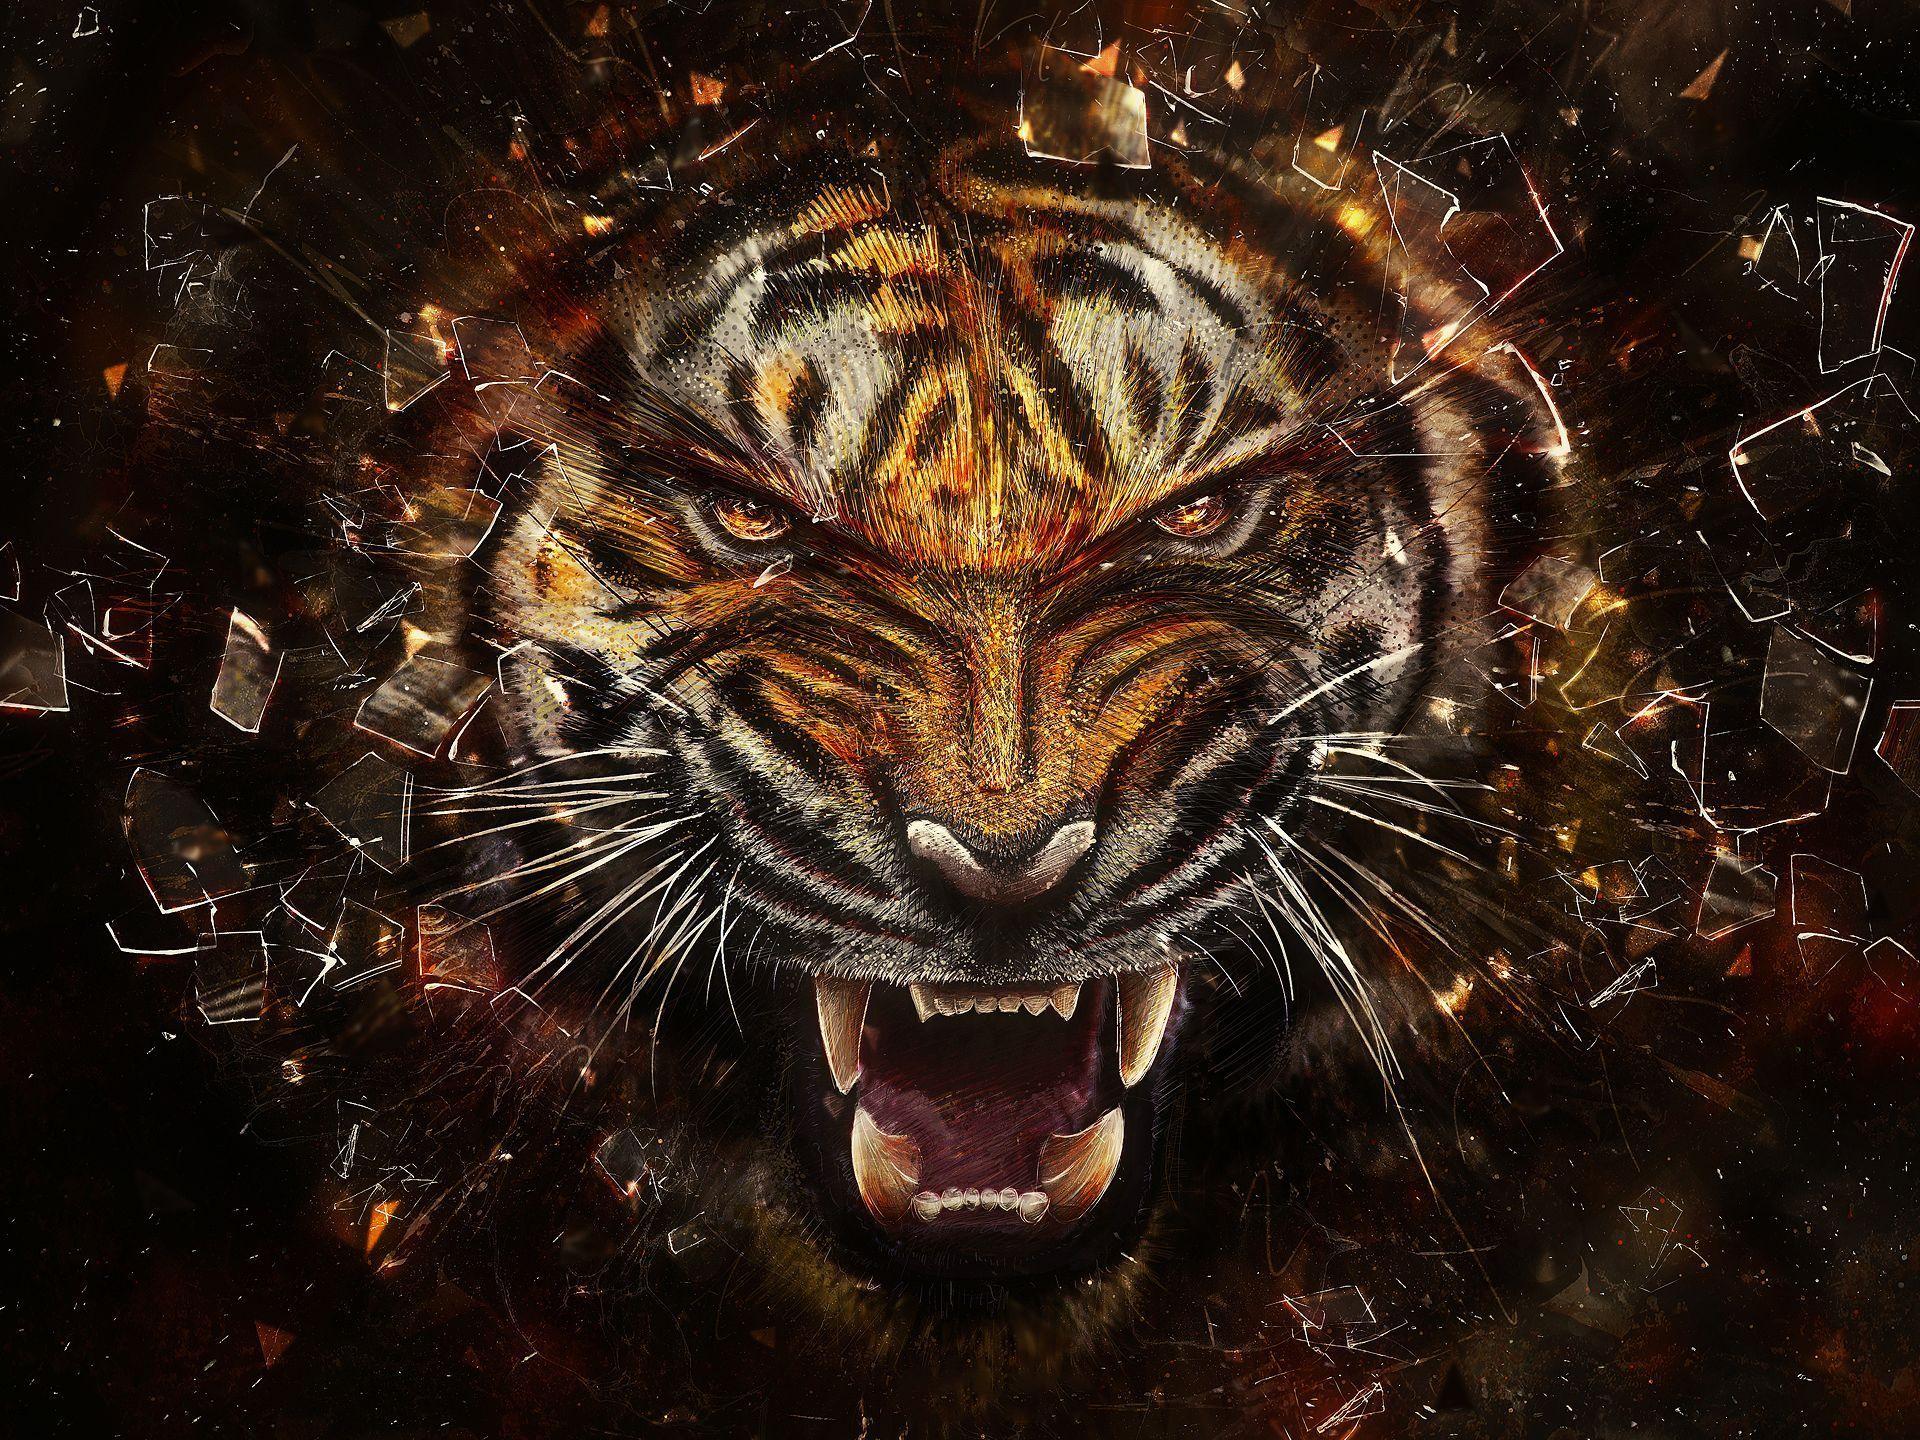 Free Download High quality tiger 3D Animals Wallpaper Num. 20, 1920 x 1440 753.1 Kb. Angry tiger, Tiger image, Tiger wallpaper